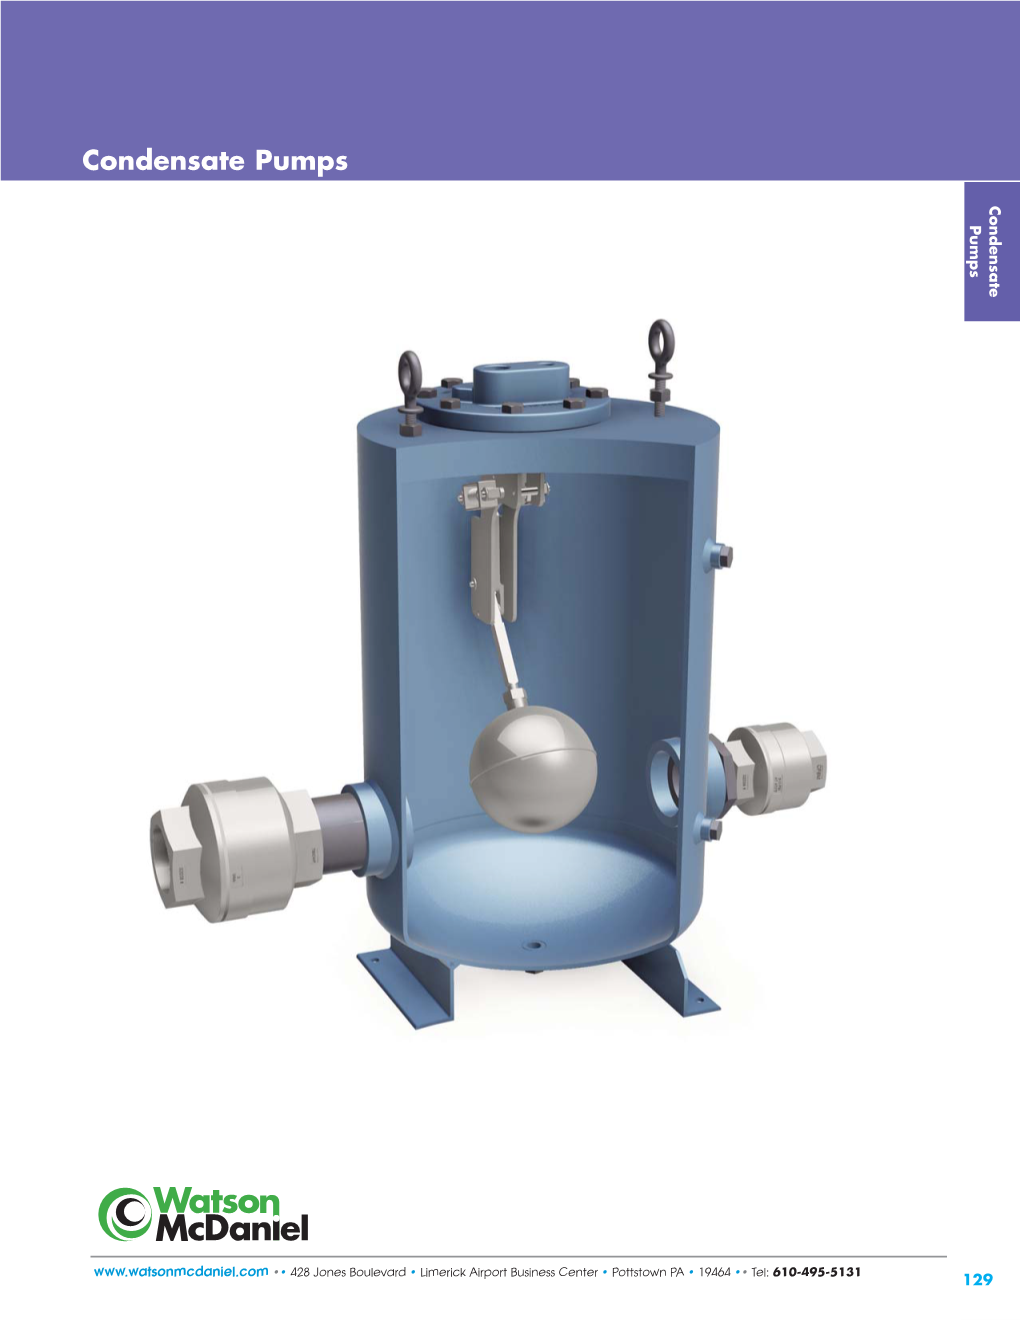 Condensate Return Pumps Introduction